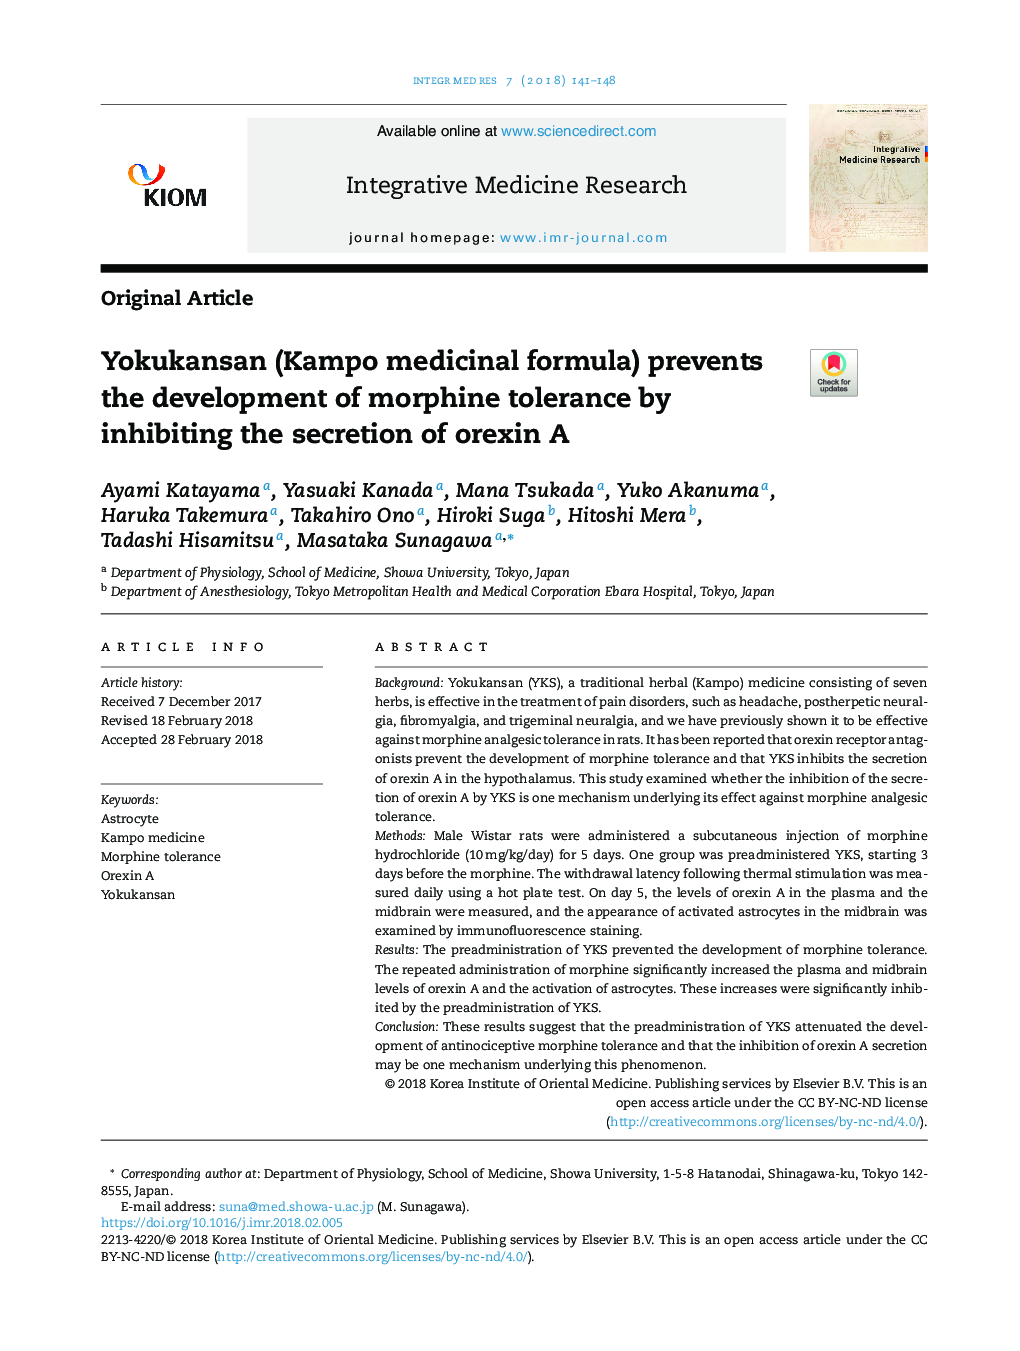 Yokukansan (Kampo medicinal formula) prevents the development of morphine tolerance by inhibiting the secretion of orexin A